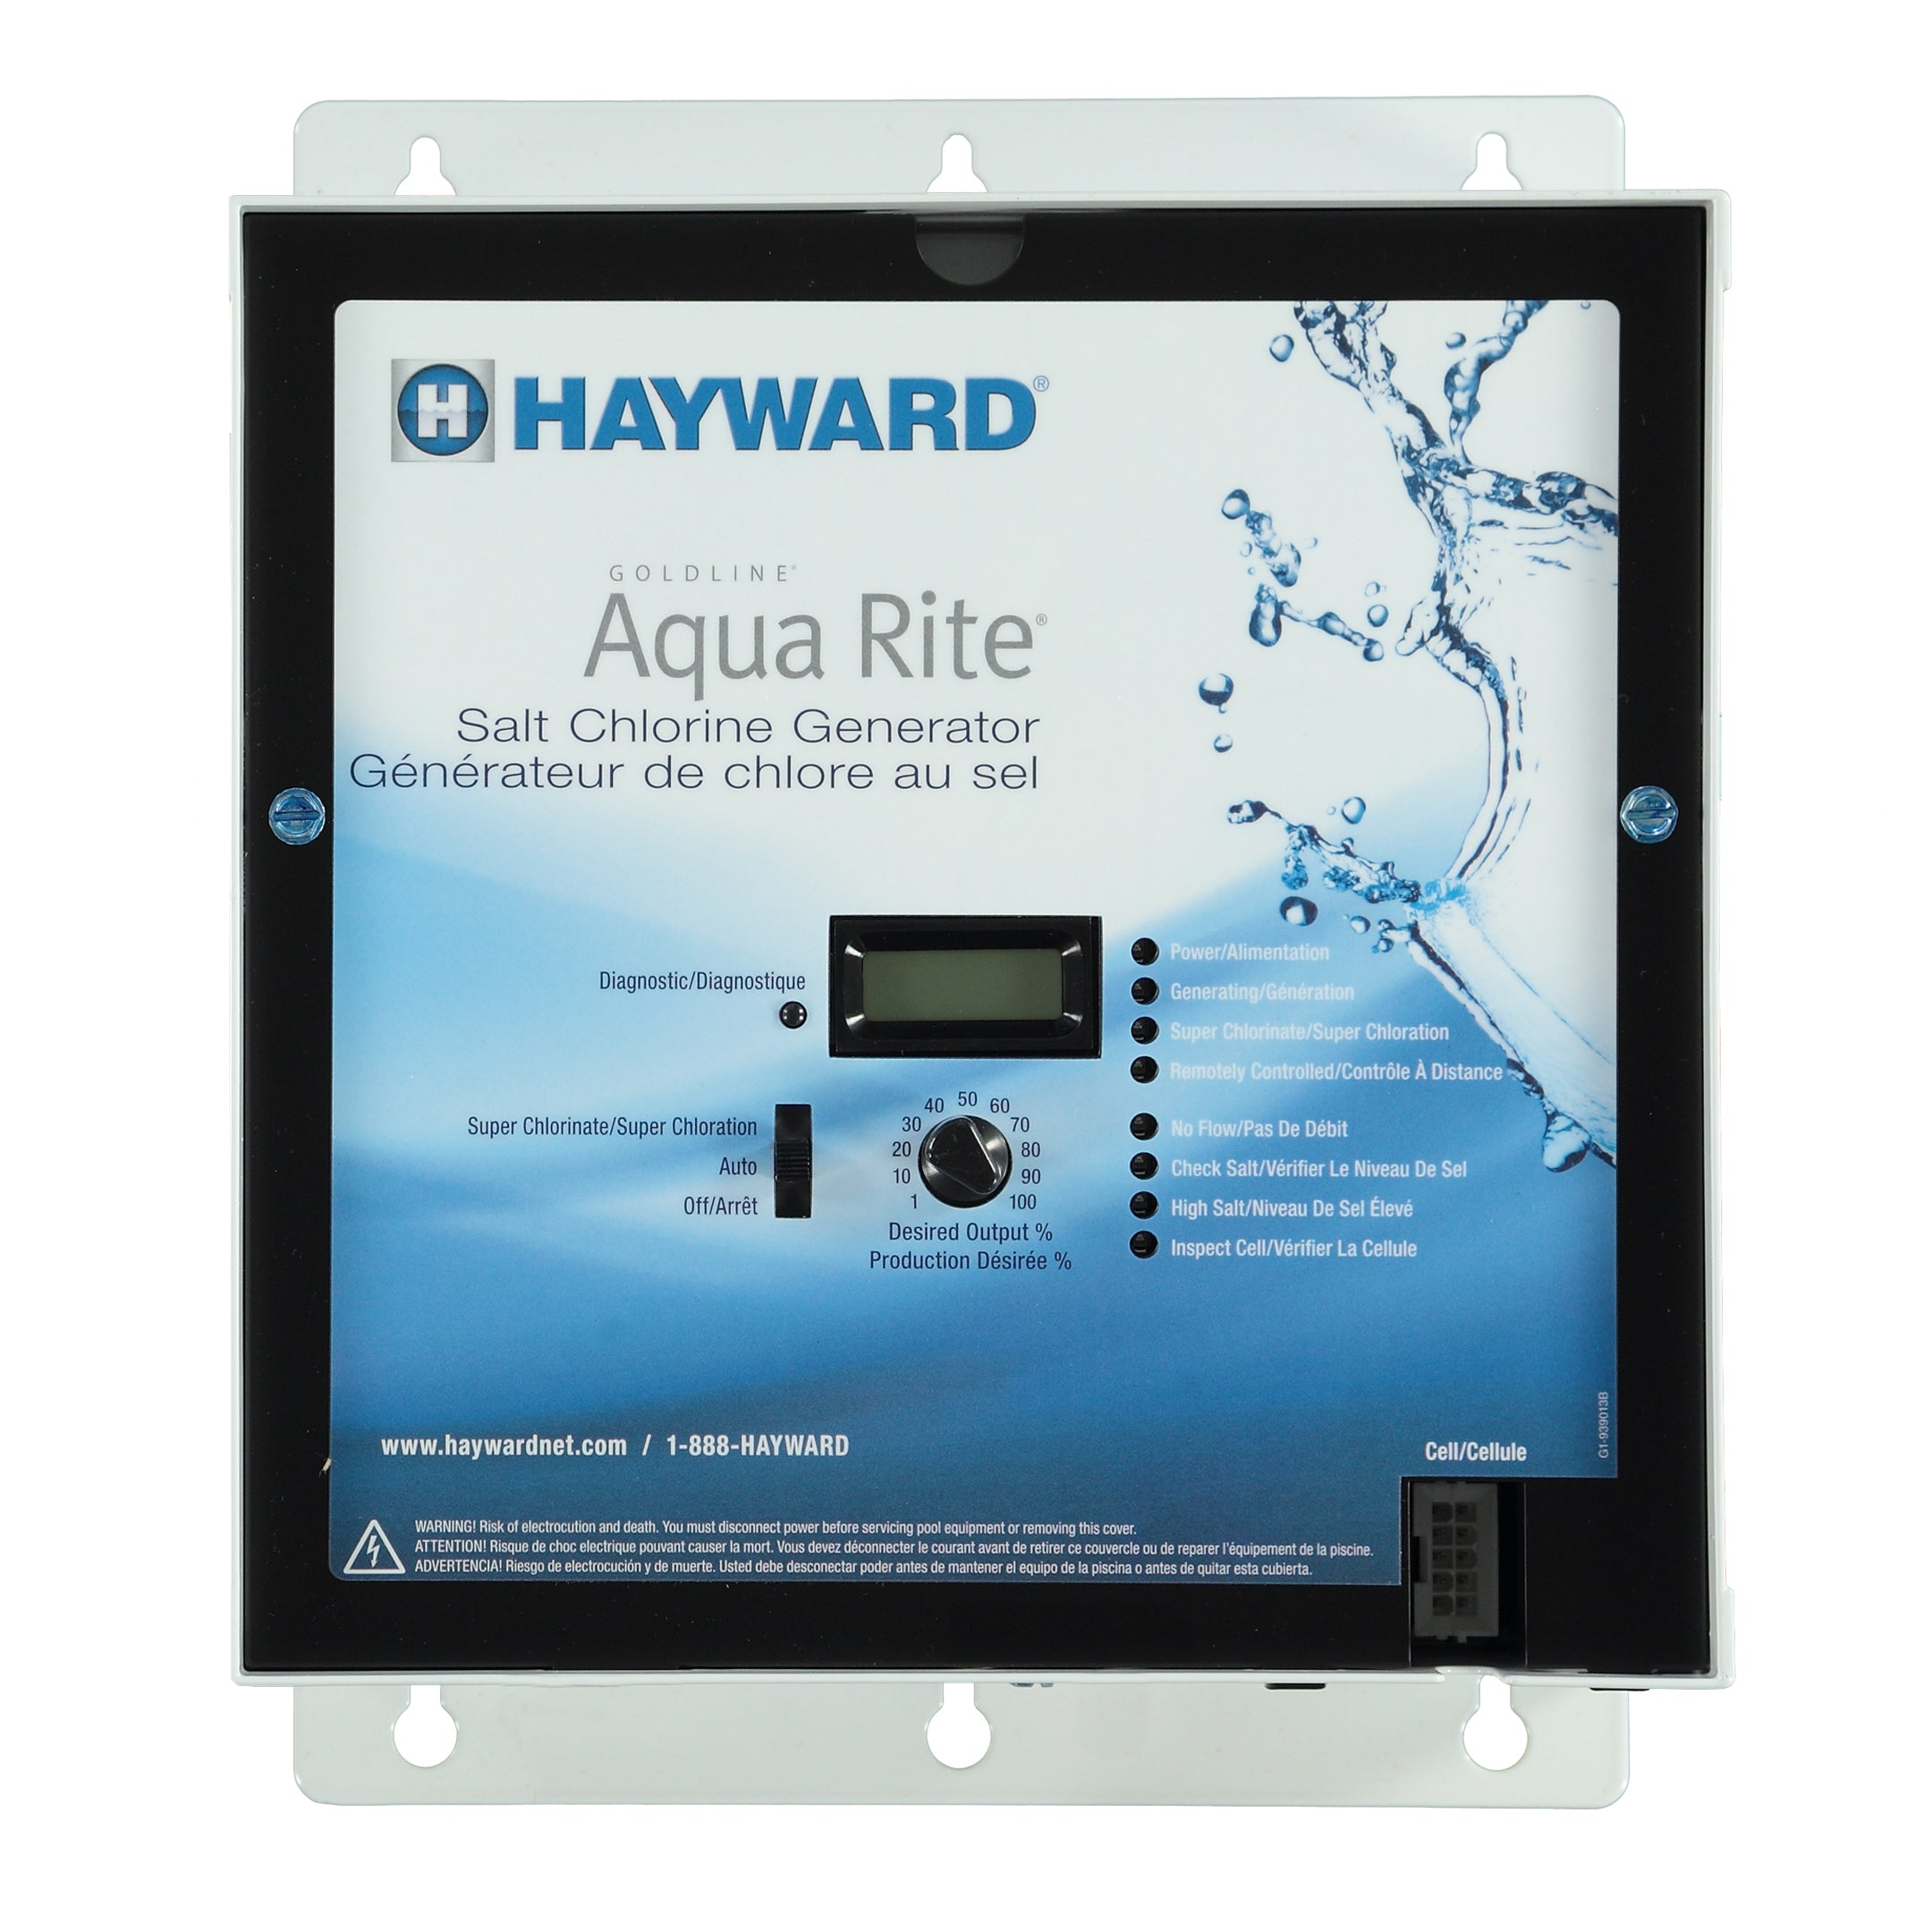 Hayward AquaRite XL (with TurboCell 3 - 60,000L /15,000 Gal)